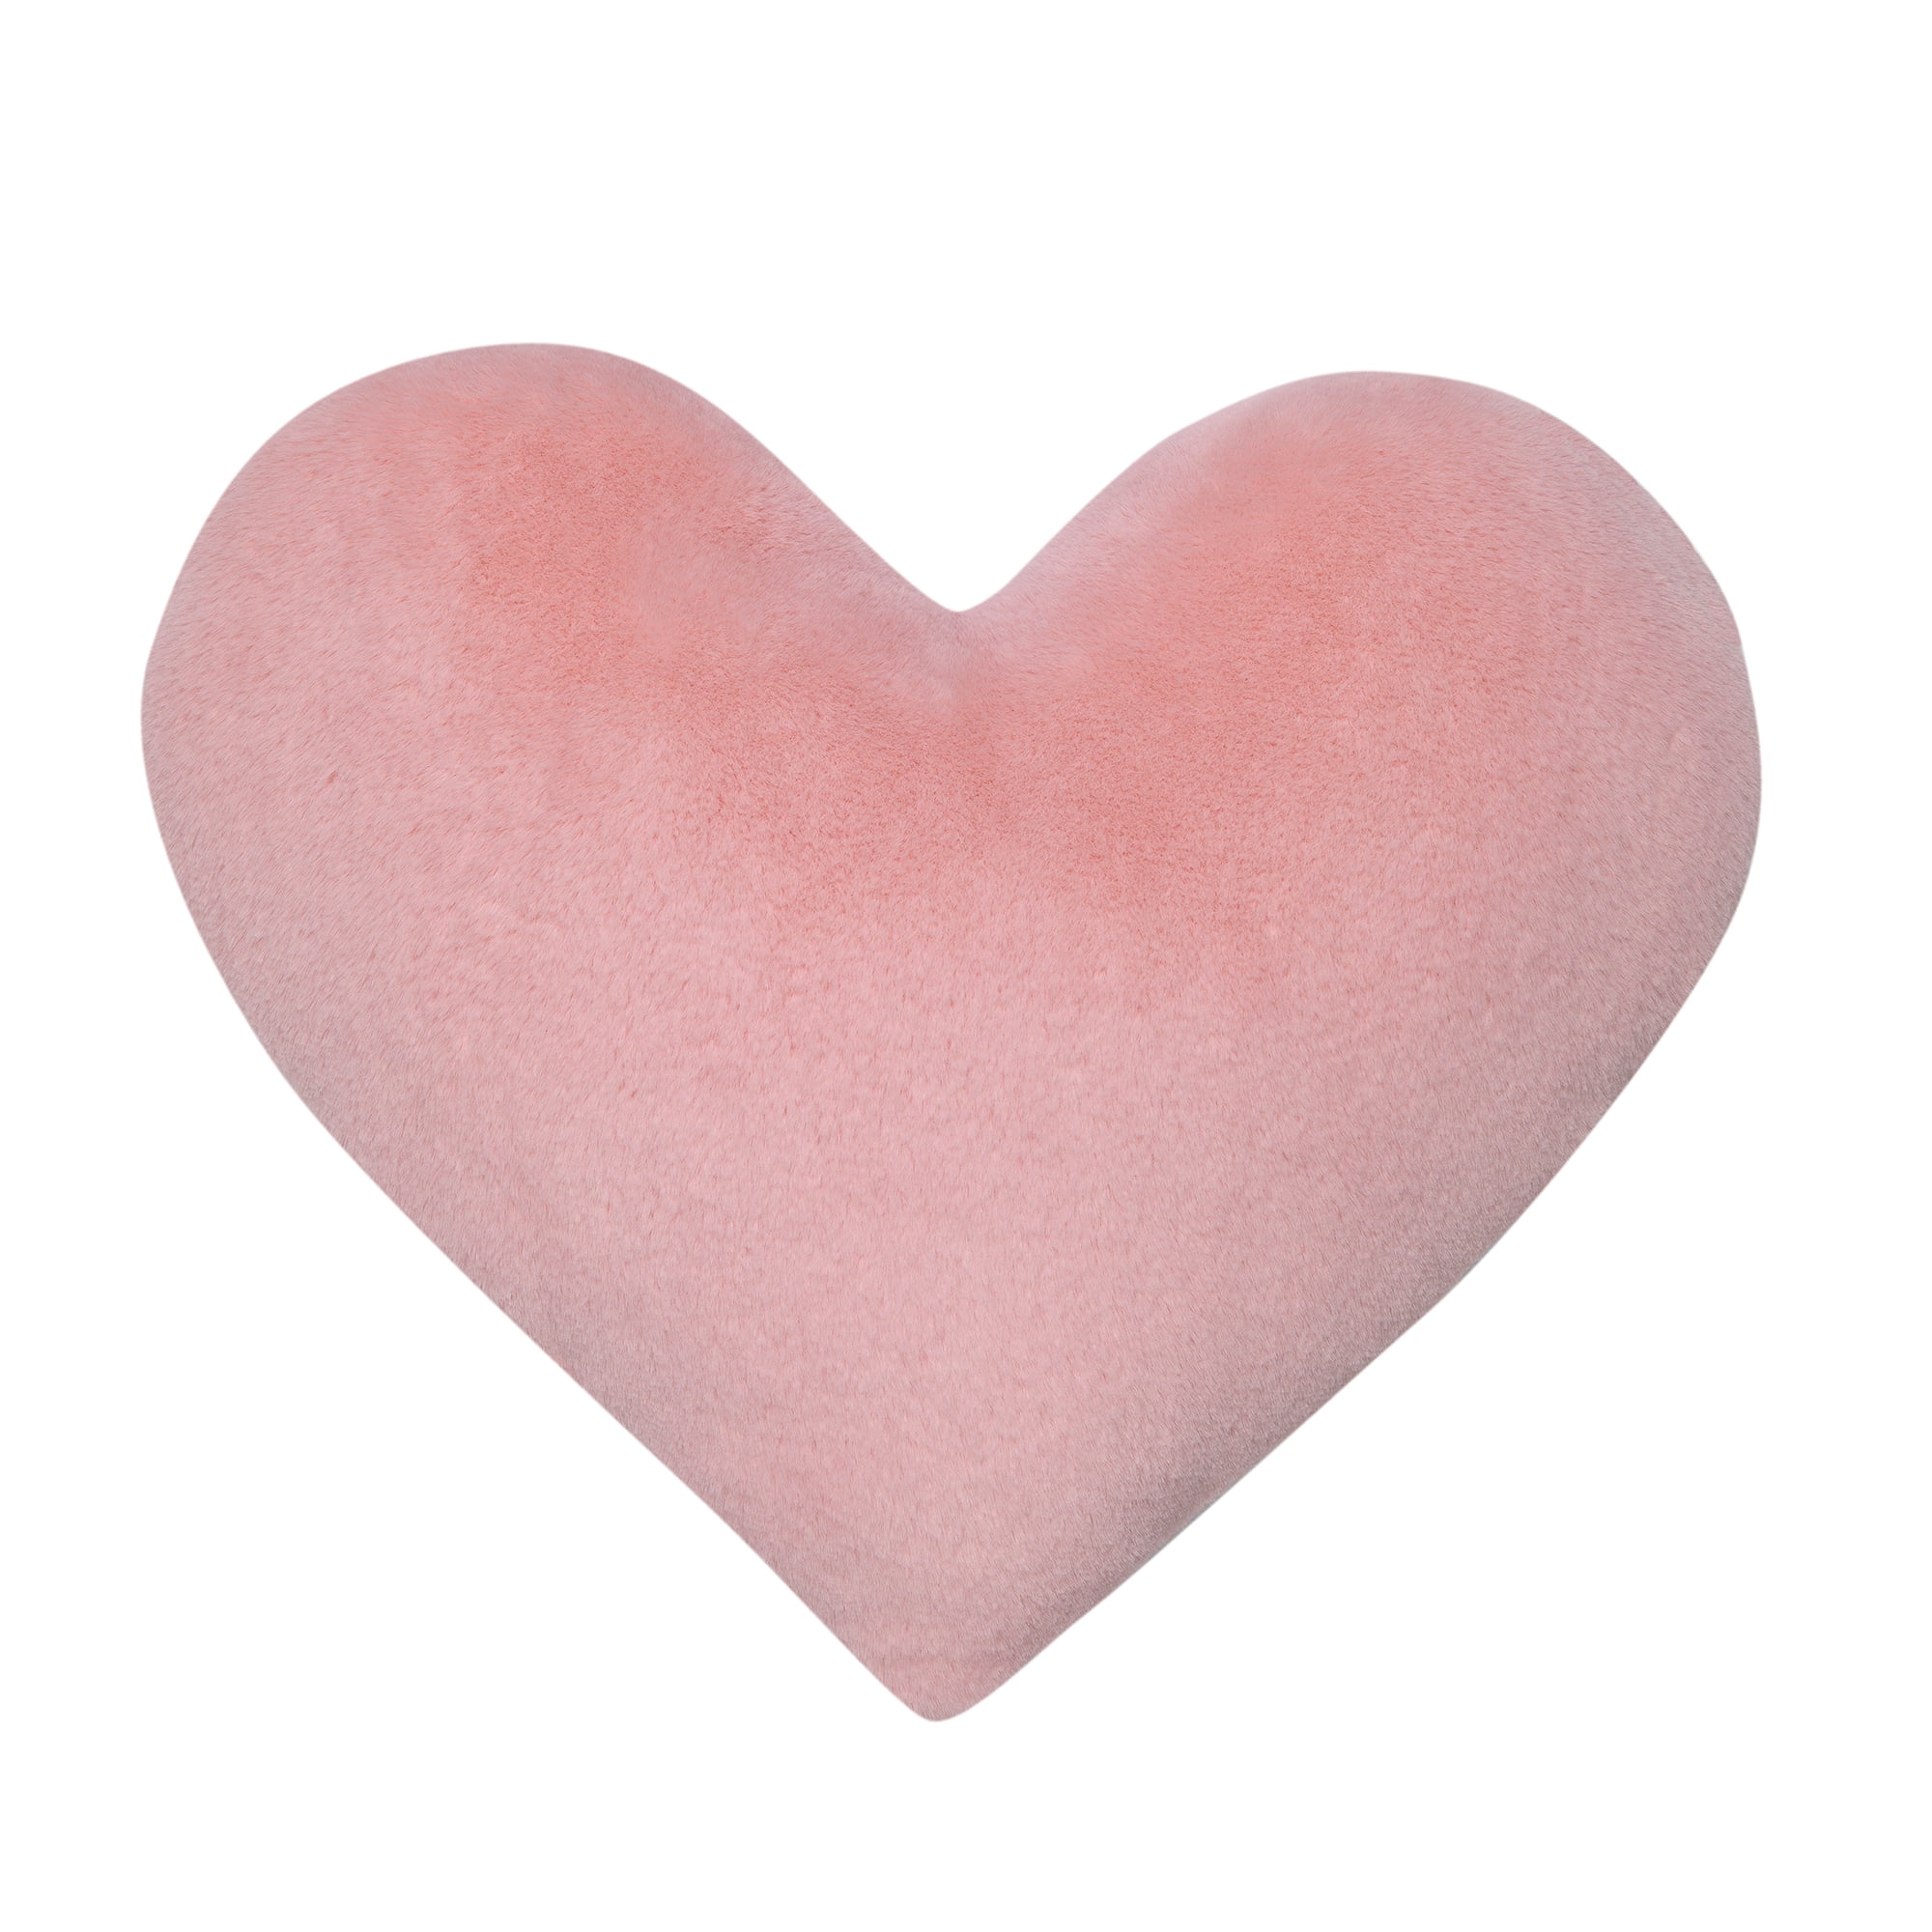 Princess Heart Pillow 13 Inches Pink Minky Throw Pillow 